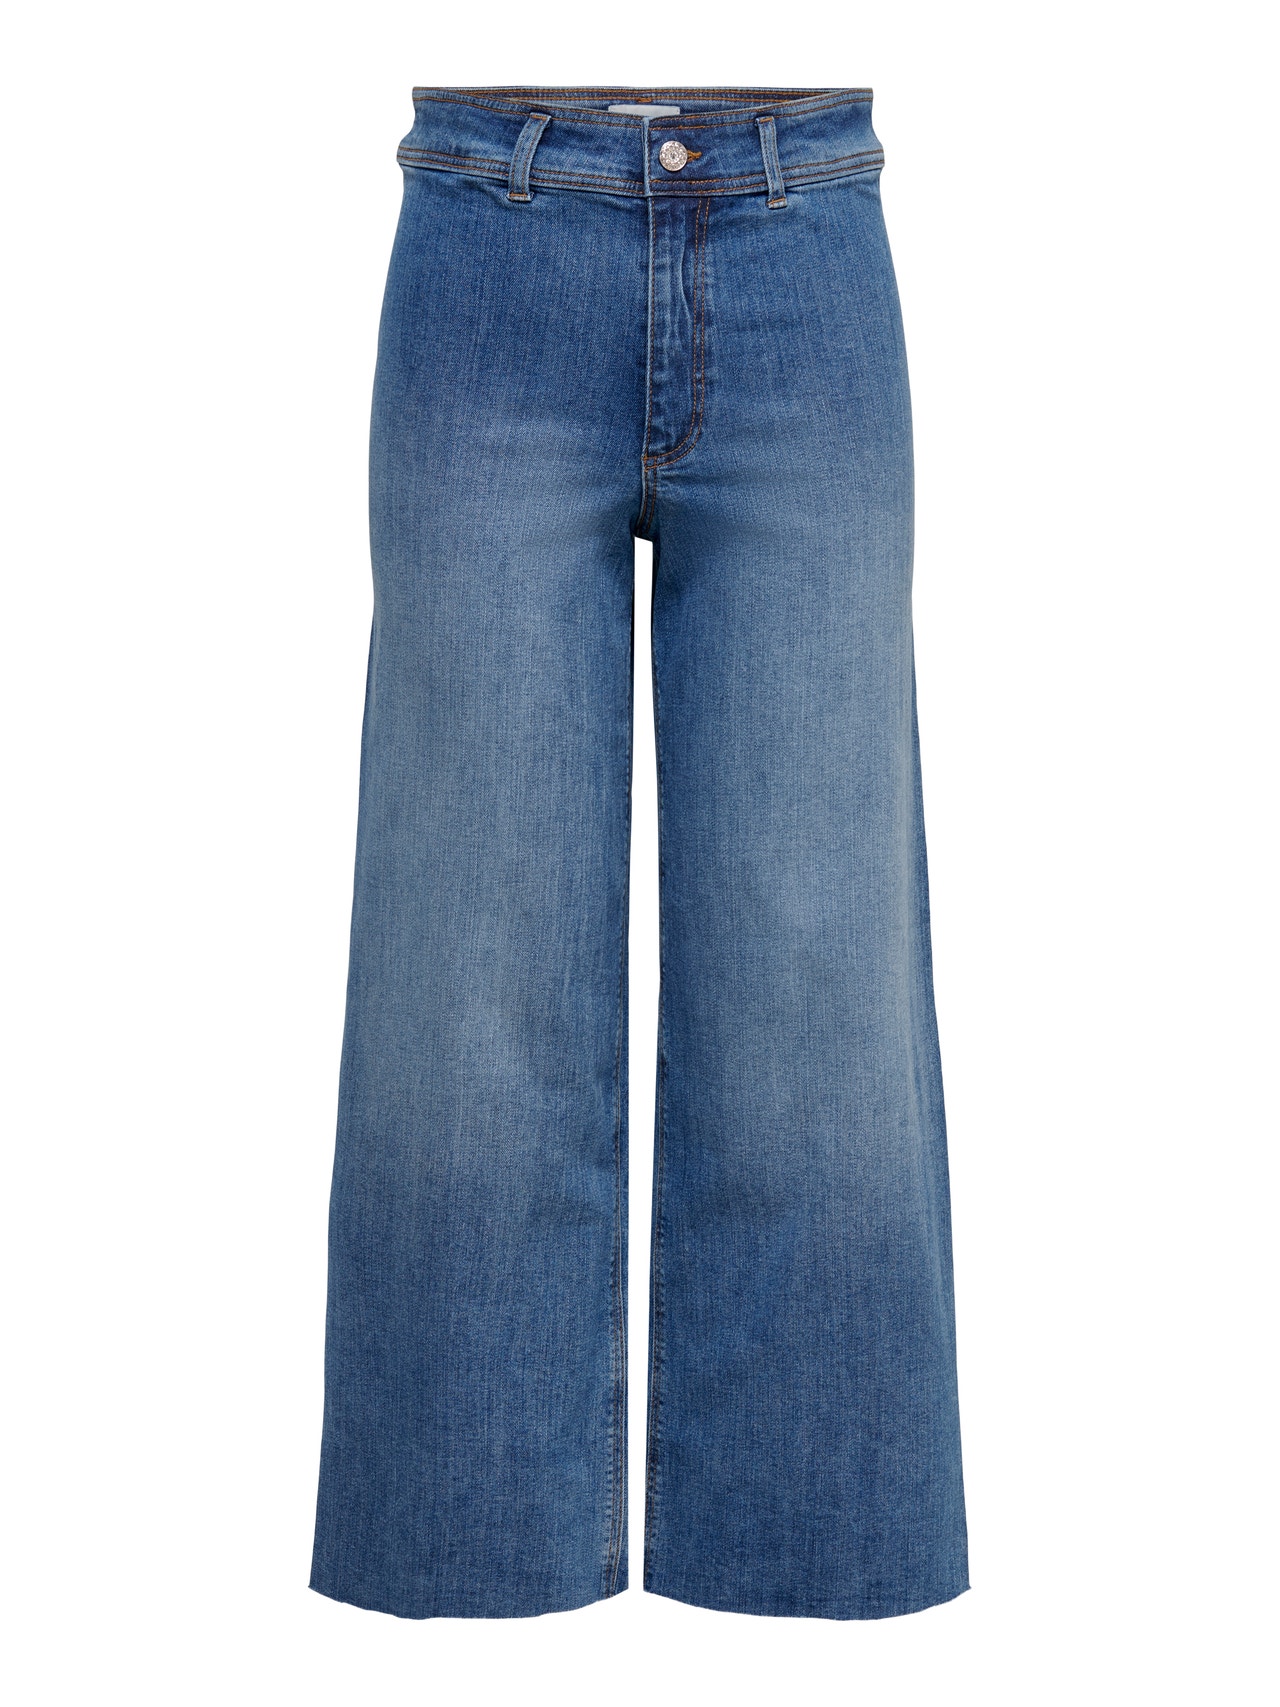 ONLY Modelo ONLSylvie ancho Jeans de talle alto -Medium Blue Denim - 15249868